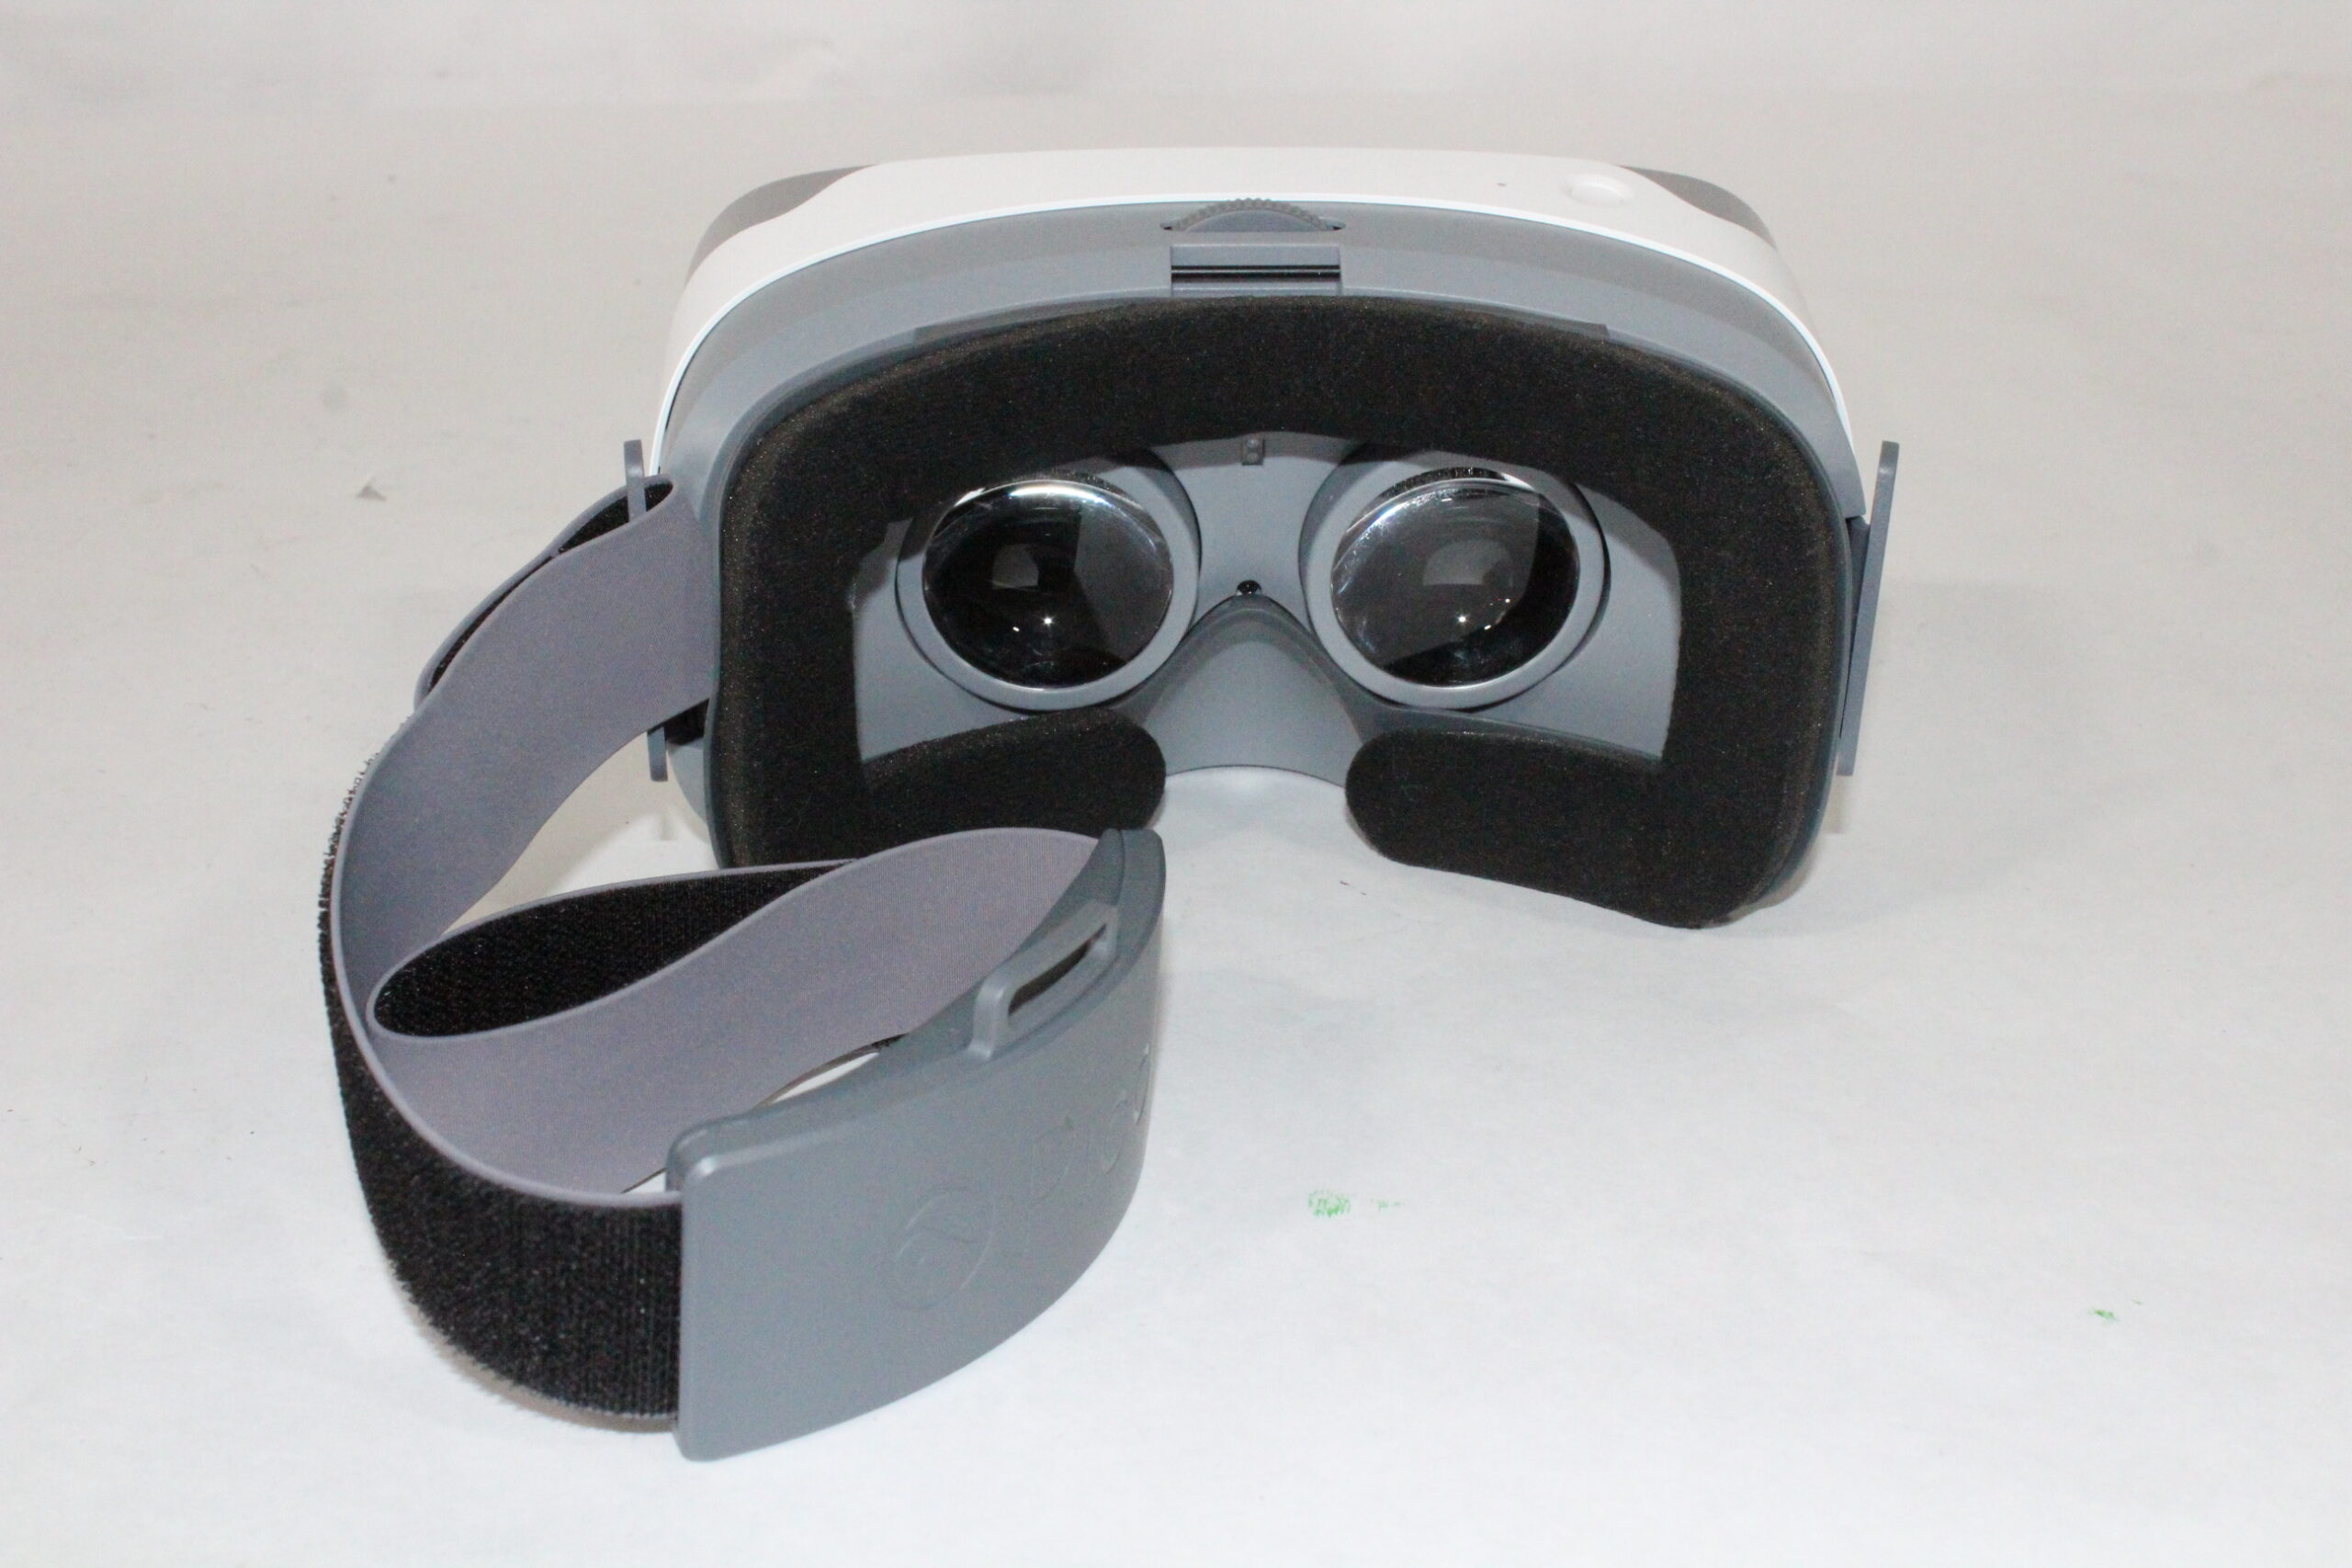 Pico Interactive Goblin VR Headset